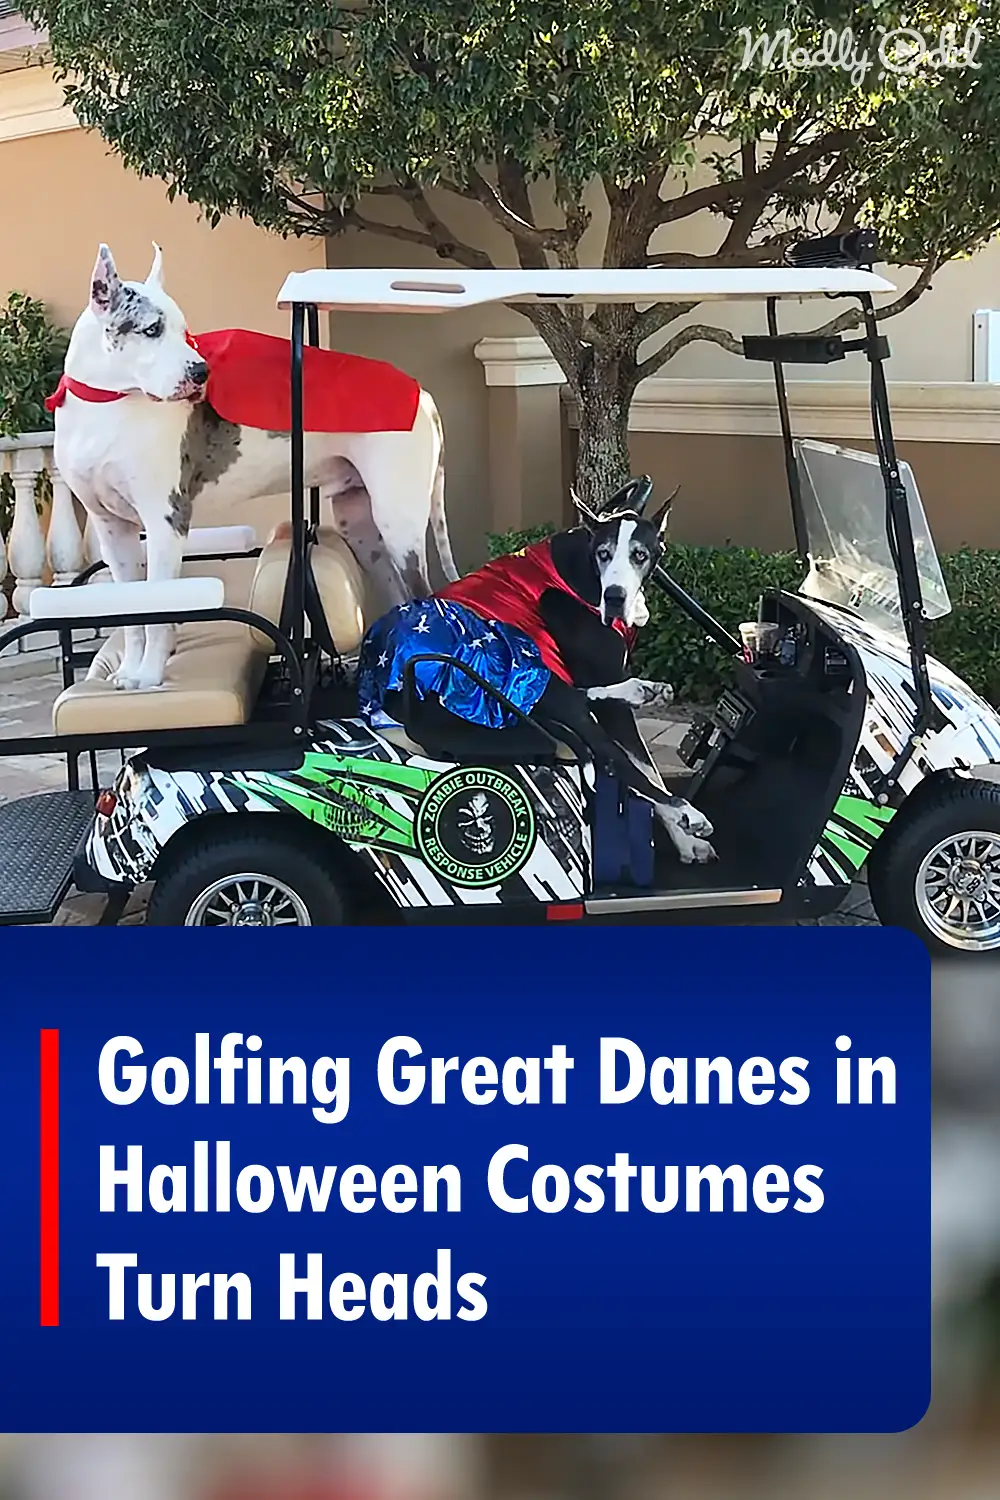 Golfing Great Danes in Halloween Costumes Turn Heads